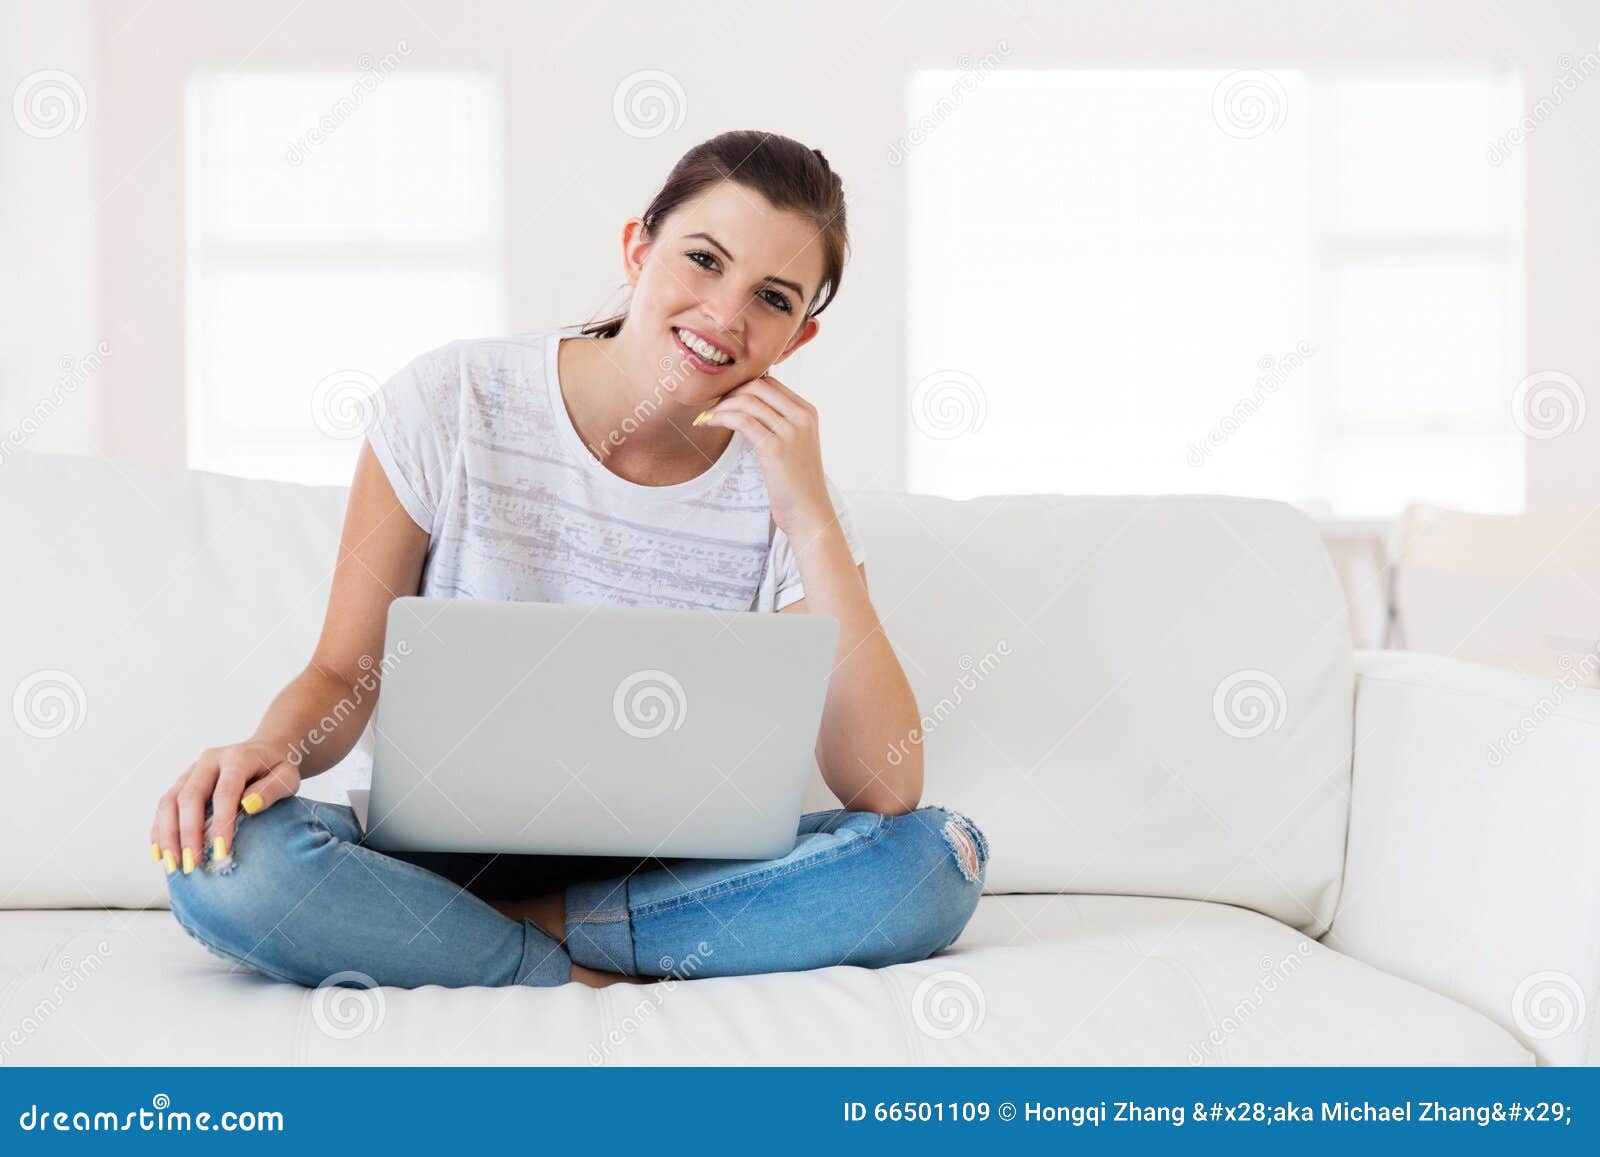 Teenage Girl Laptop Computer Stock Image - Image of cheerful, portrait ...